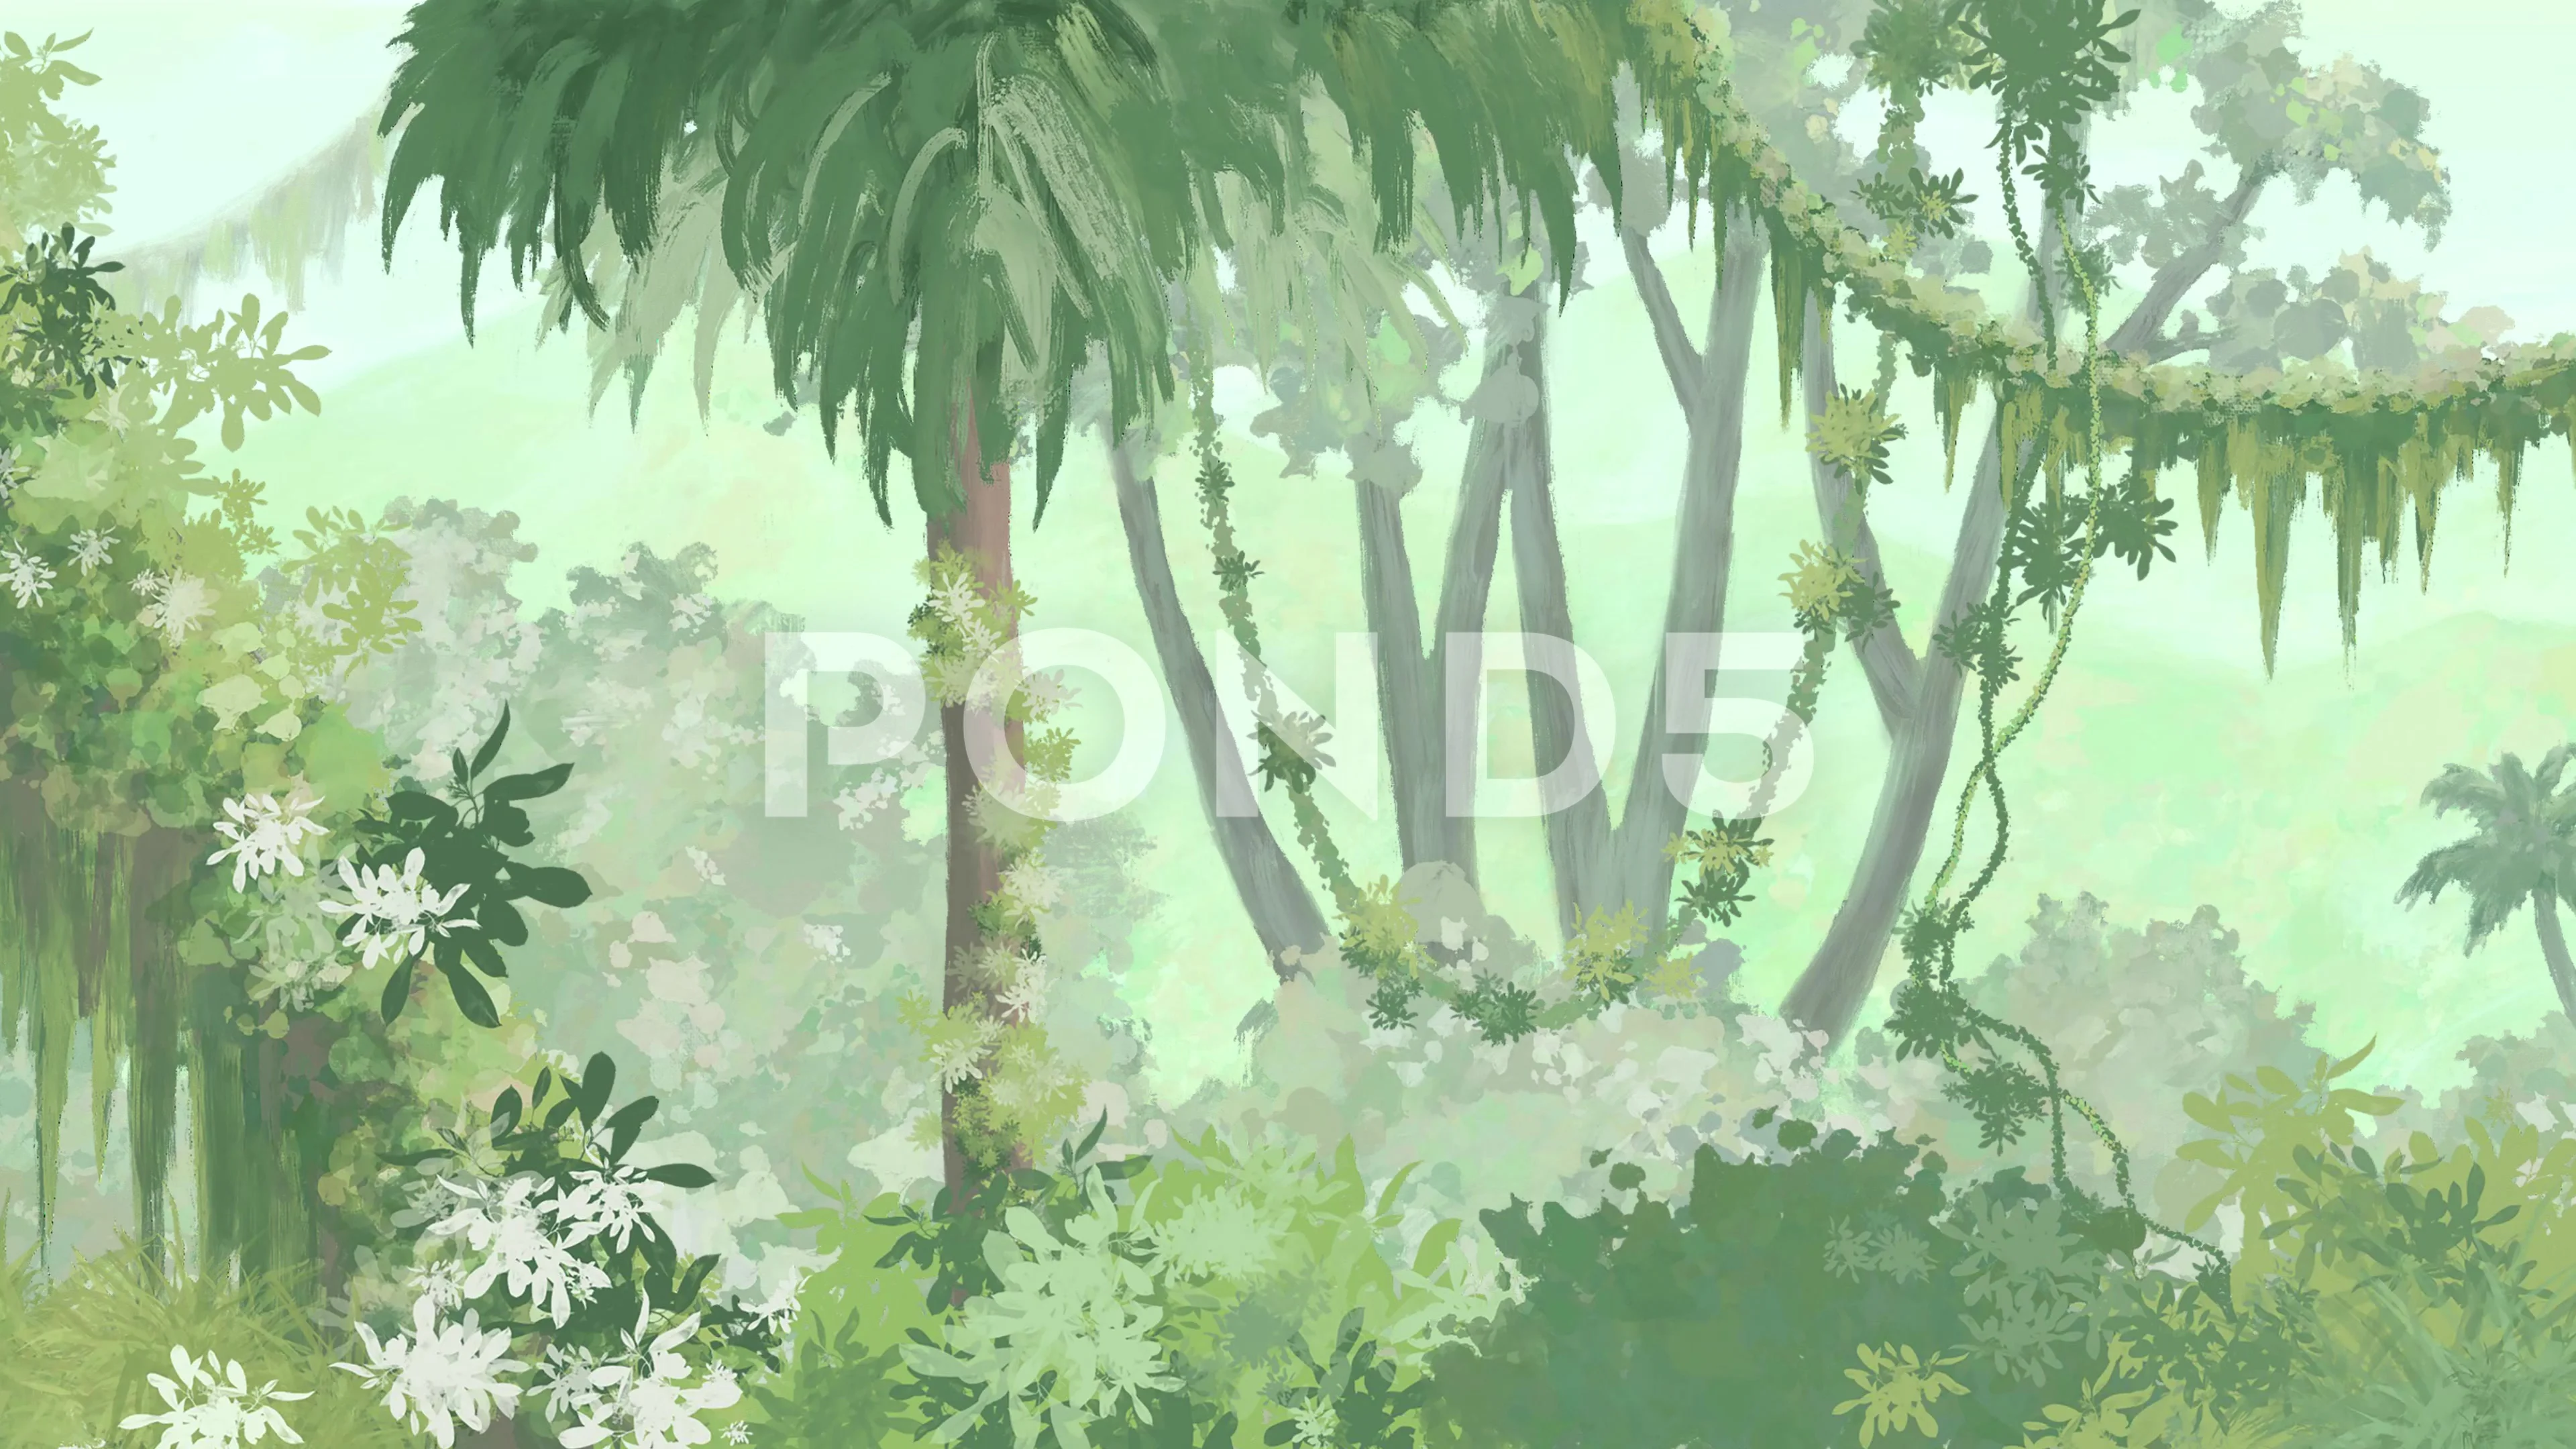 Jungle+Explorer | Jungle Explorer 1 of 4 by ~vitamindy on deviantART |  Adventure art, Character art, Anime jungle